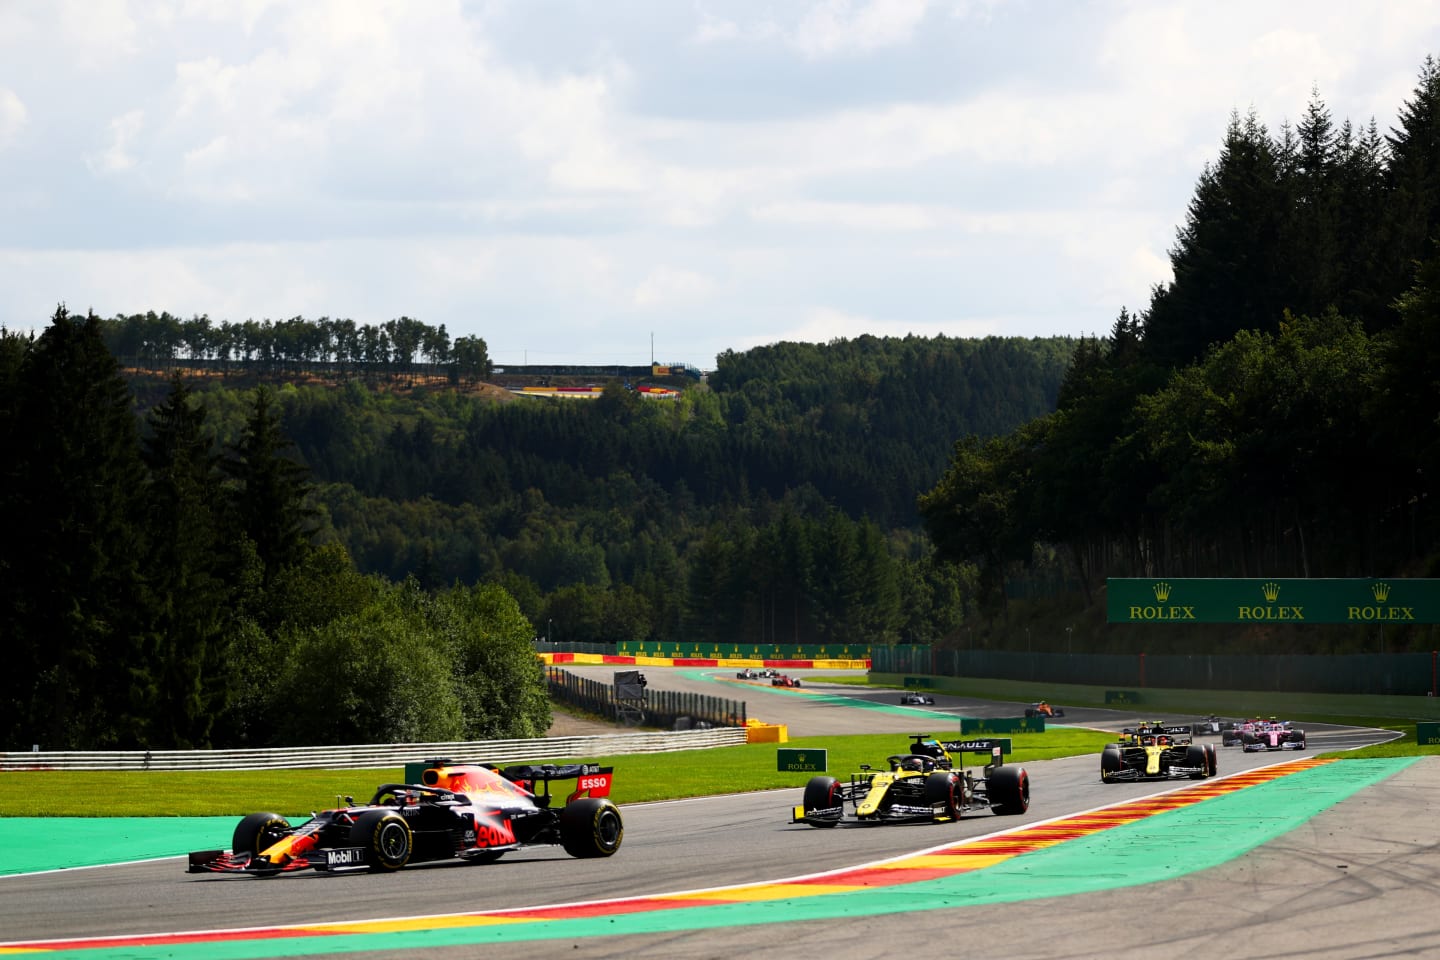 SPA, BELGIUM - AUGUST 30: Max Verstappen of the Netherlands driving the (33) Aston Martin Red Bull